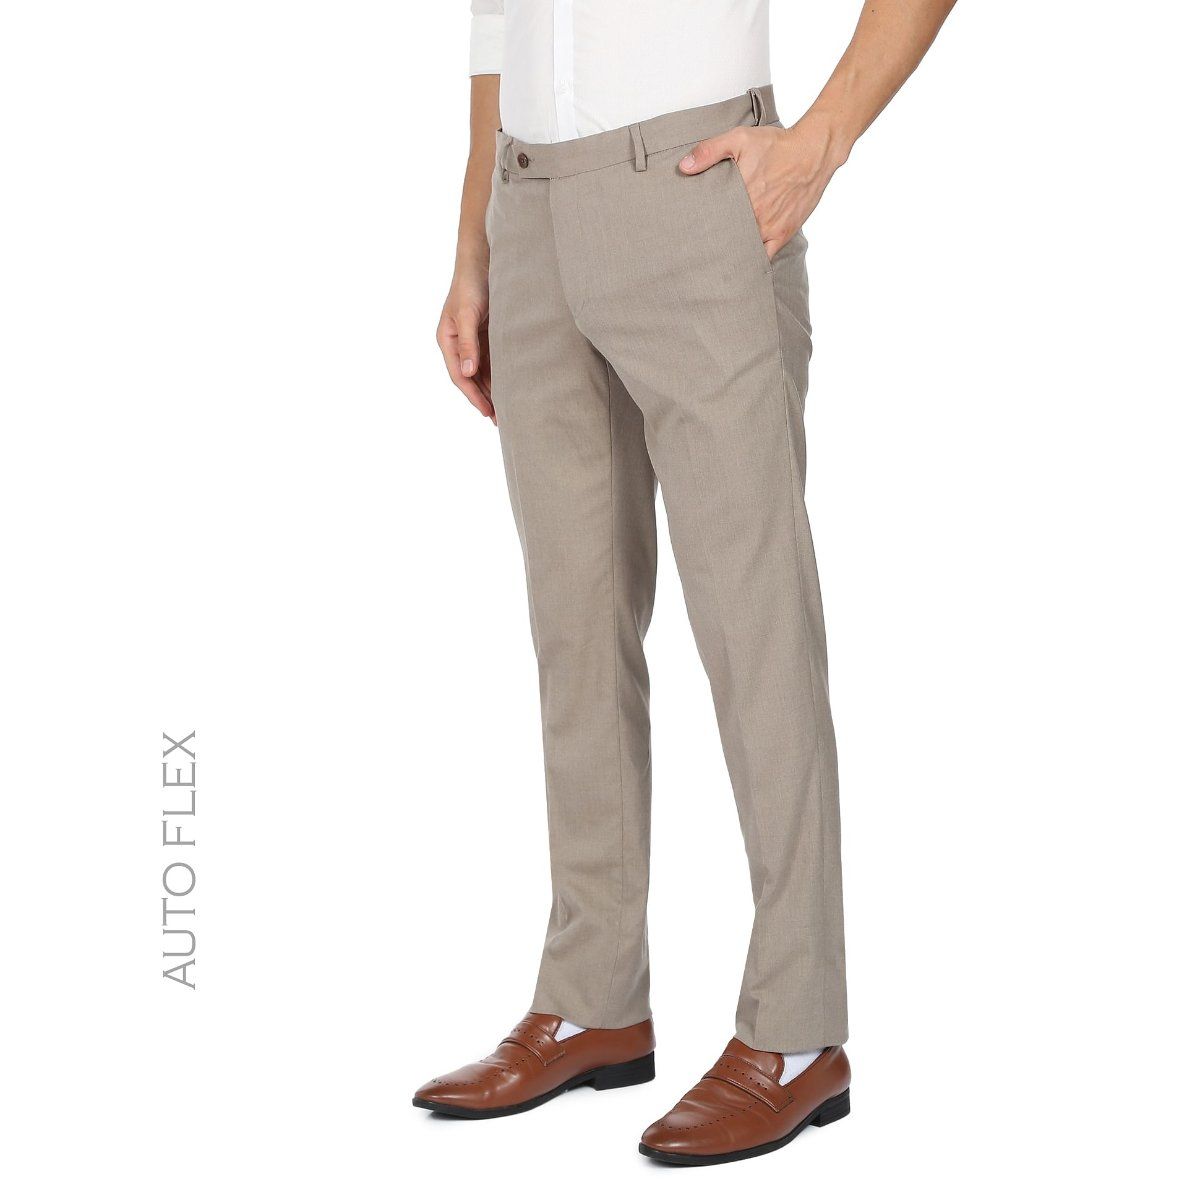 Buy Arrow Autoflex Dobby Textured Formal Trousers online